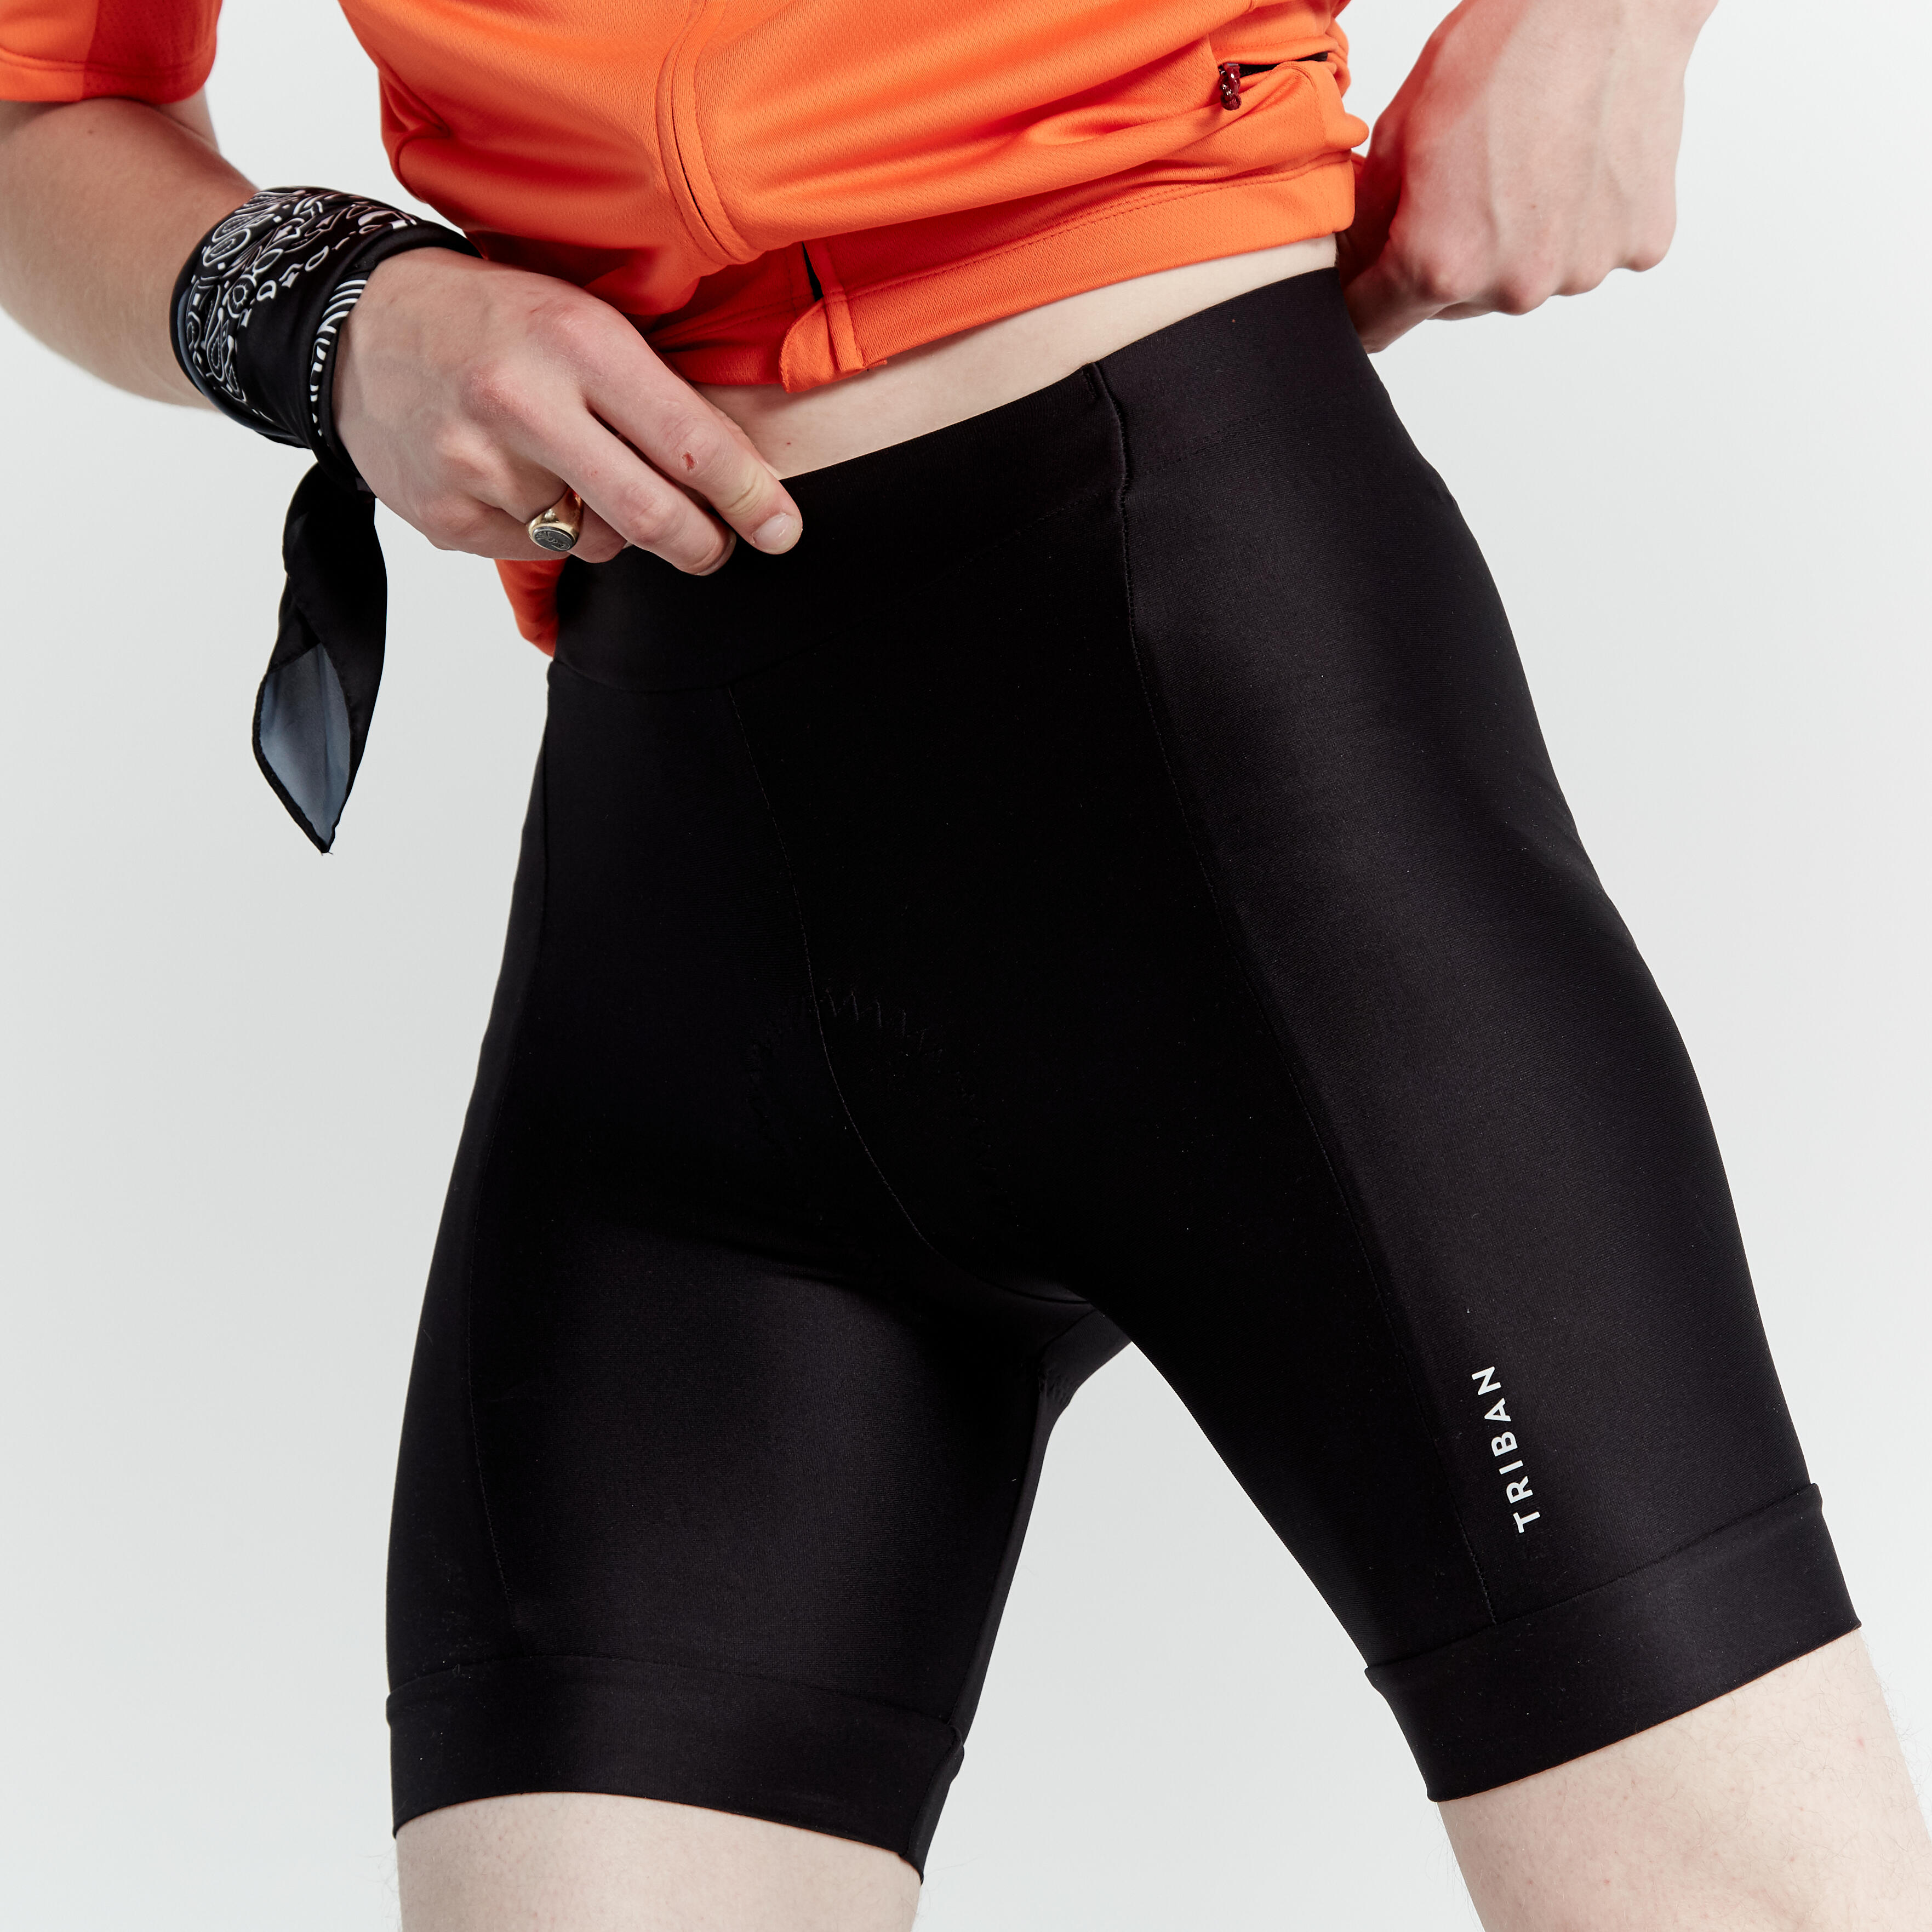 sport cycling shorts